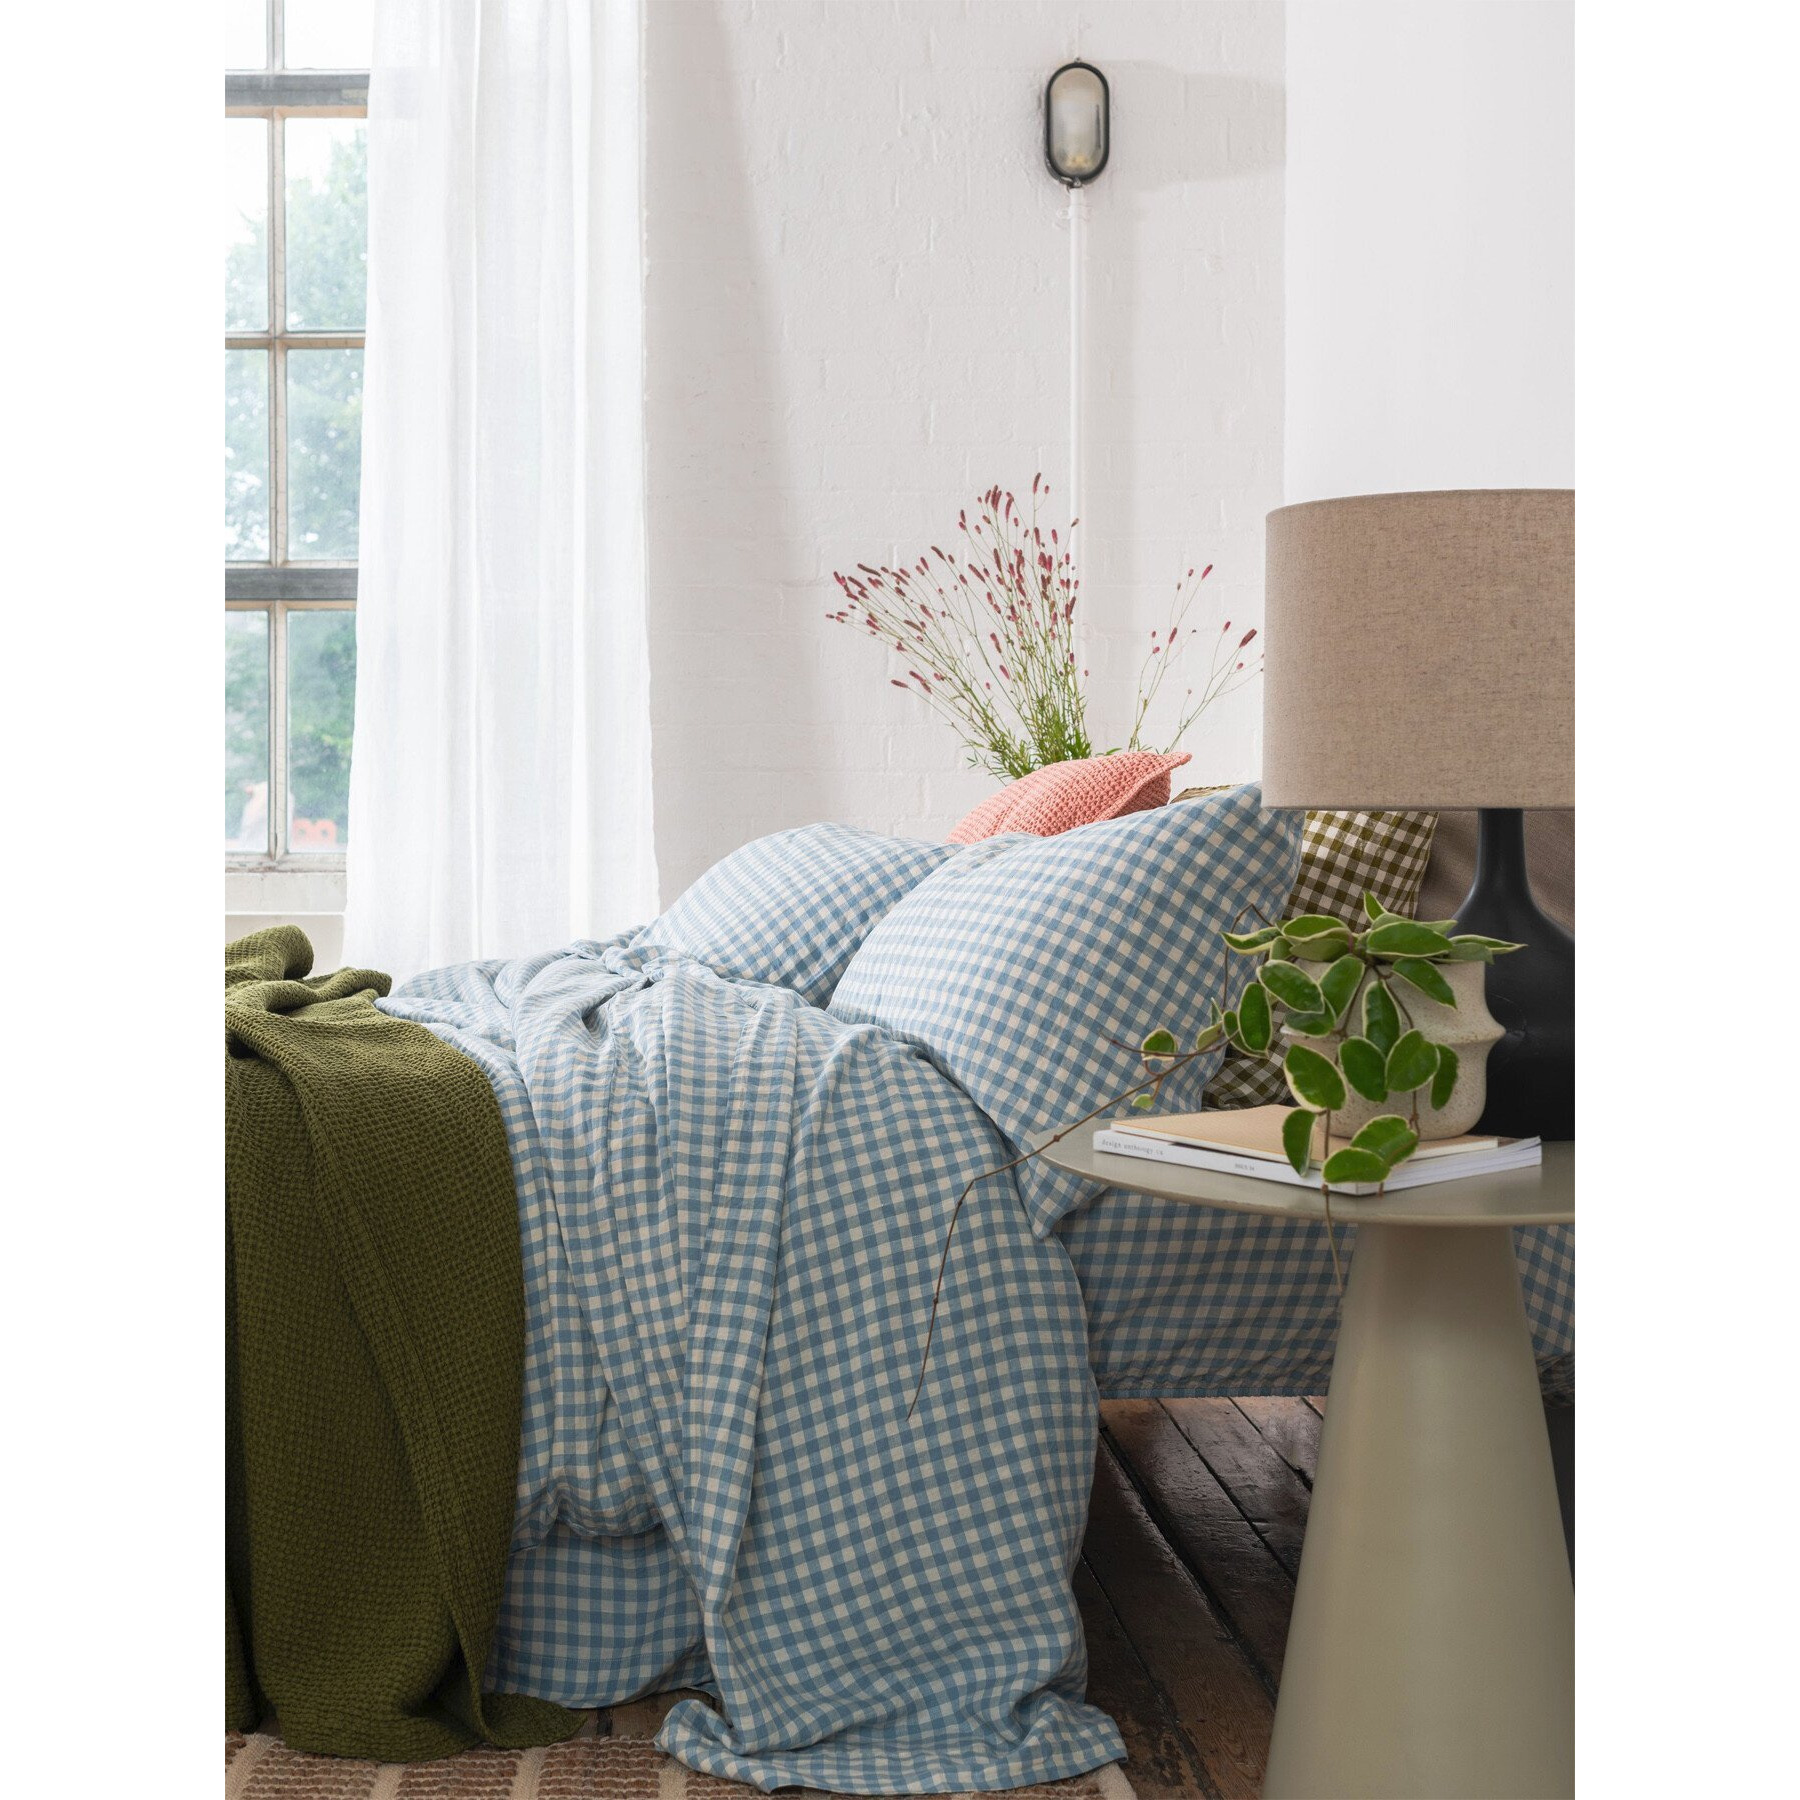 Piglet in Bed Gingham Linen Flat Sheet - Size King Blue - image 1